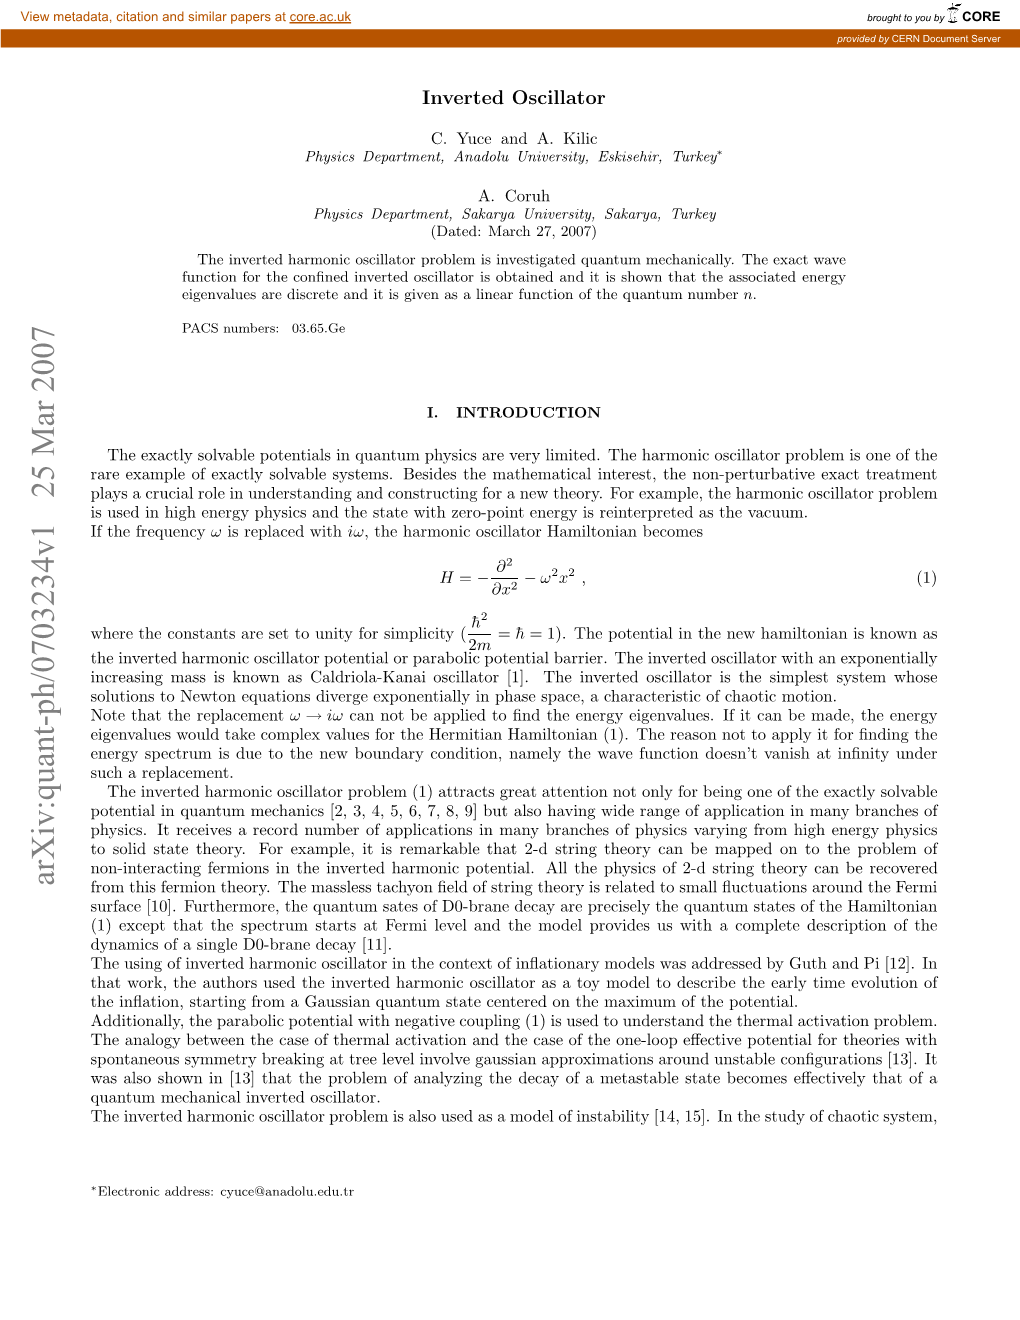 Arxiv:Quant-Ph/0703234V1 25 Mar 2007 Nrysetu Sdet H E Onaycniin Namely Condition, Boundary New the Replacement